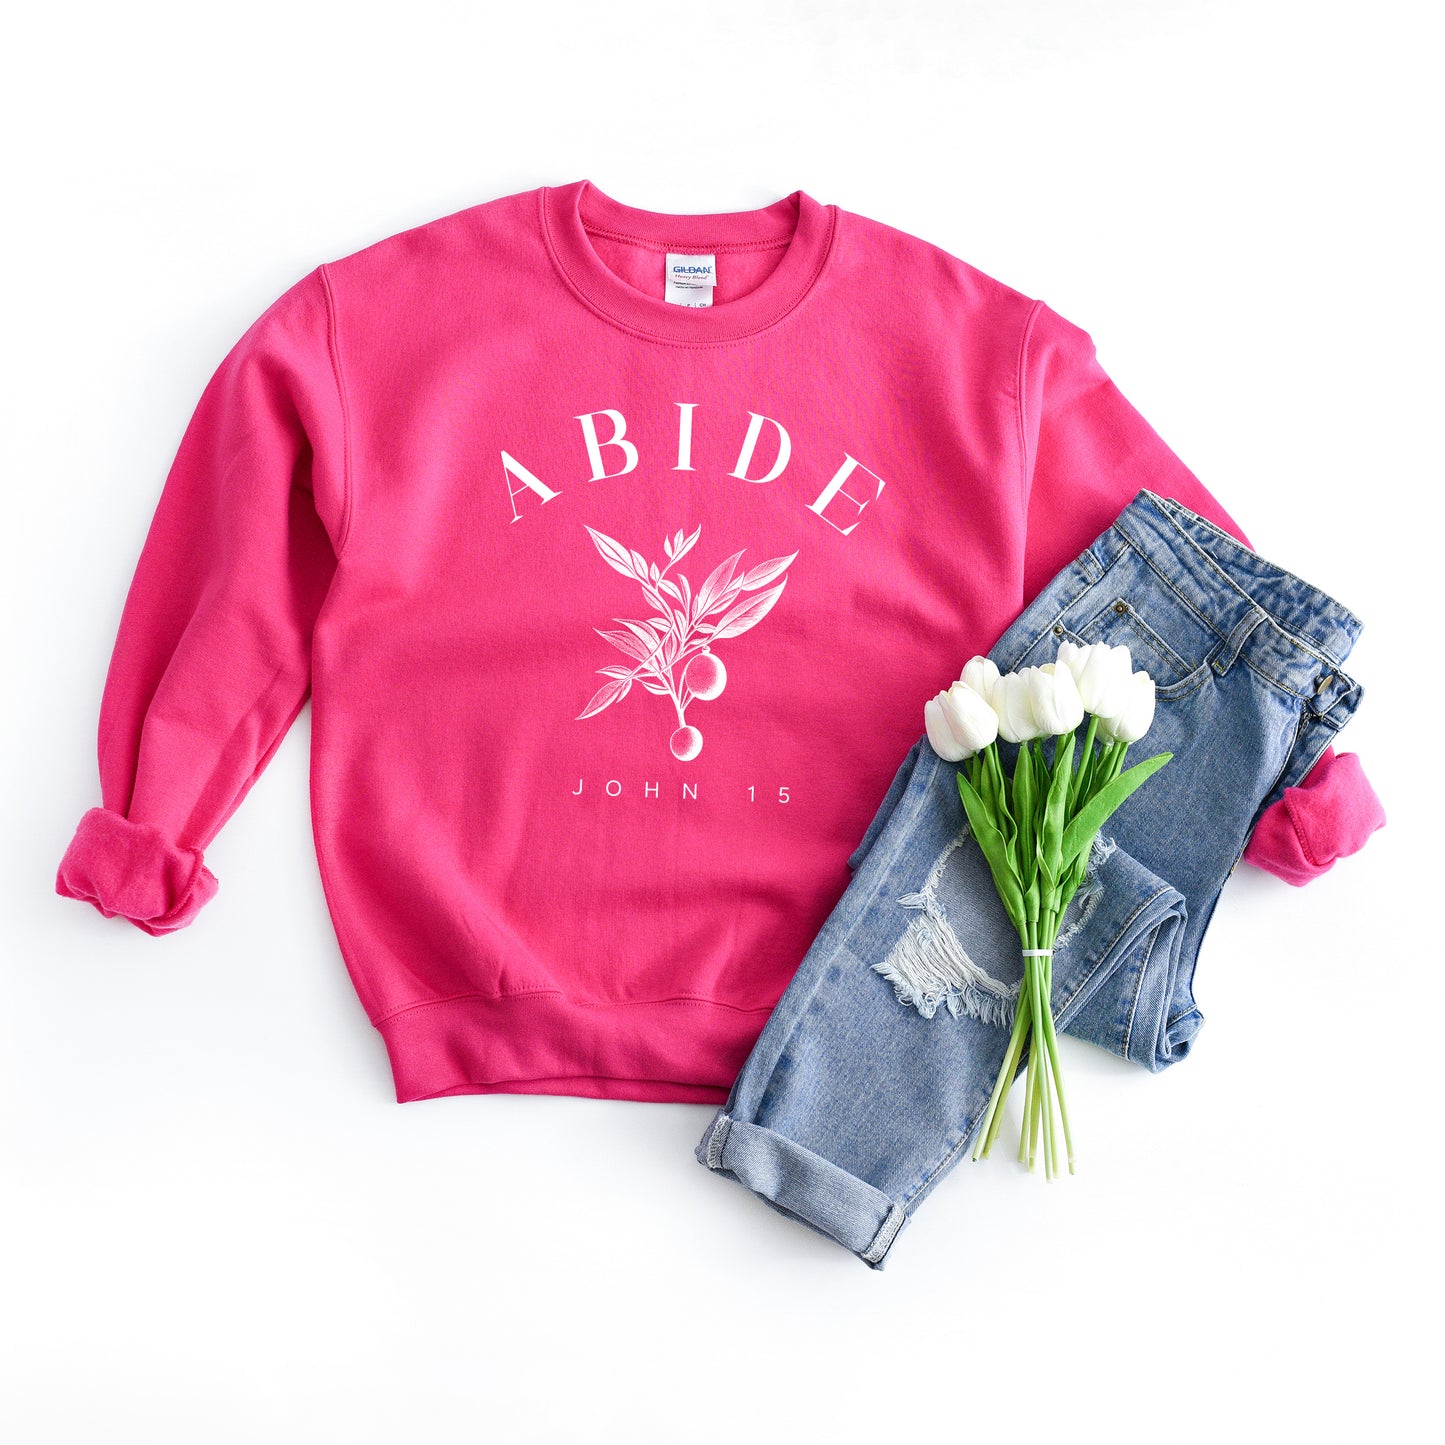 Abide Curved | Sweatshirt